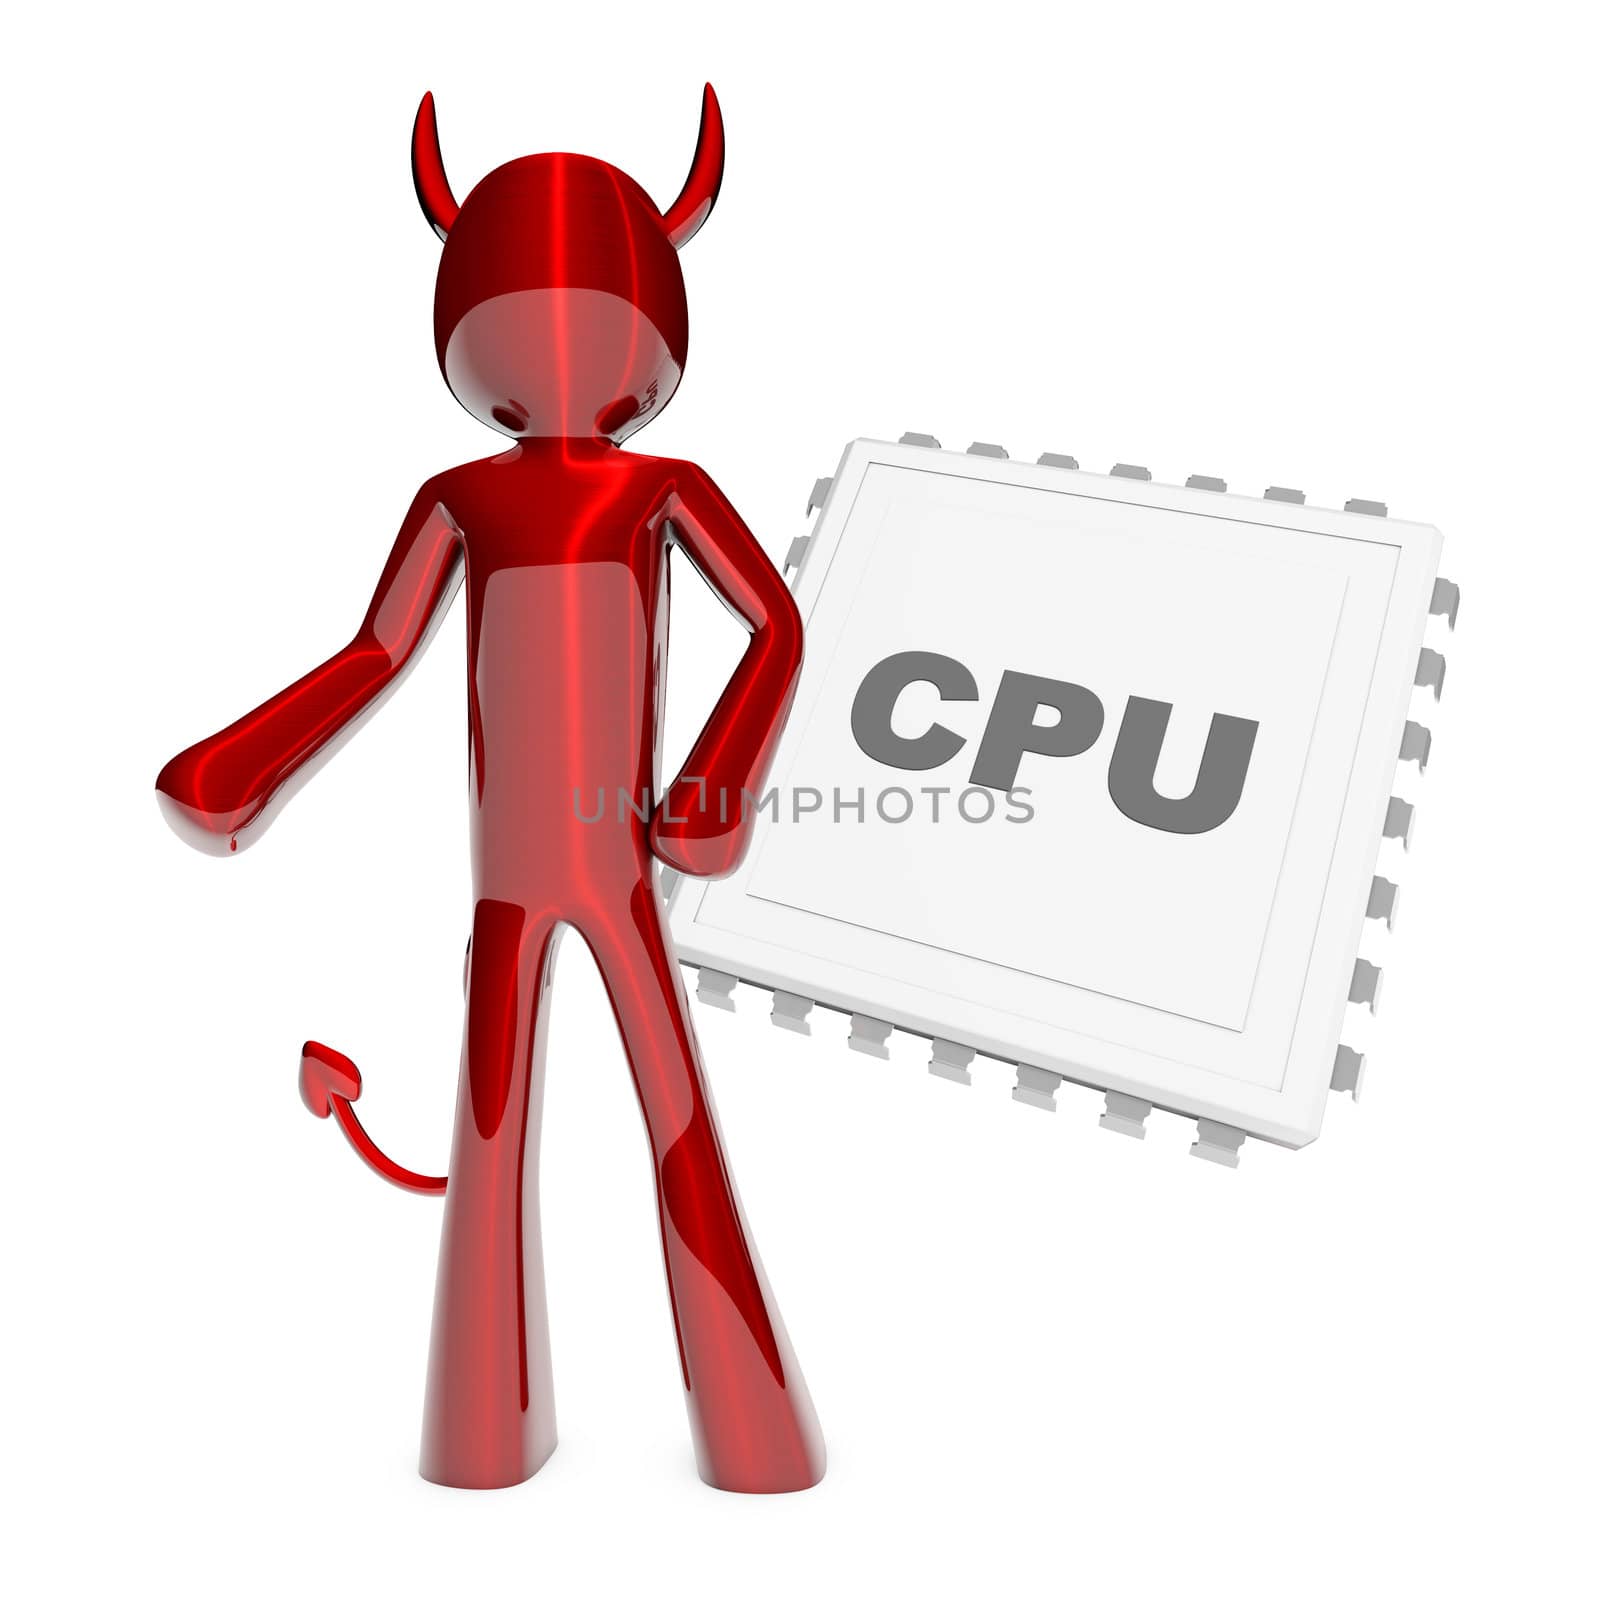 CPU Devil by Spectral